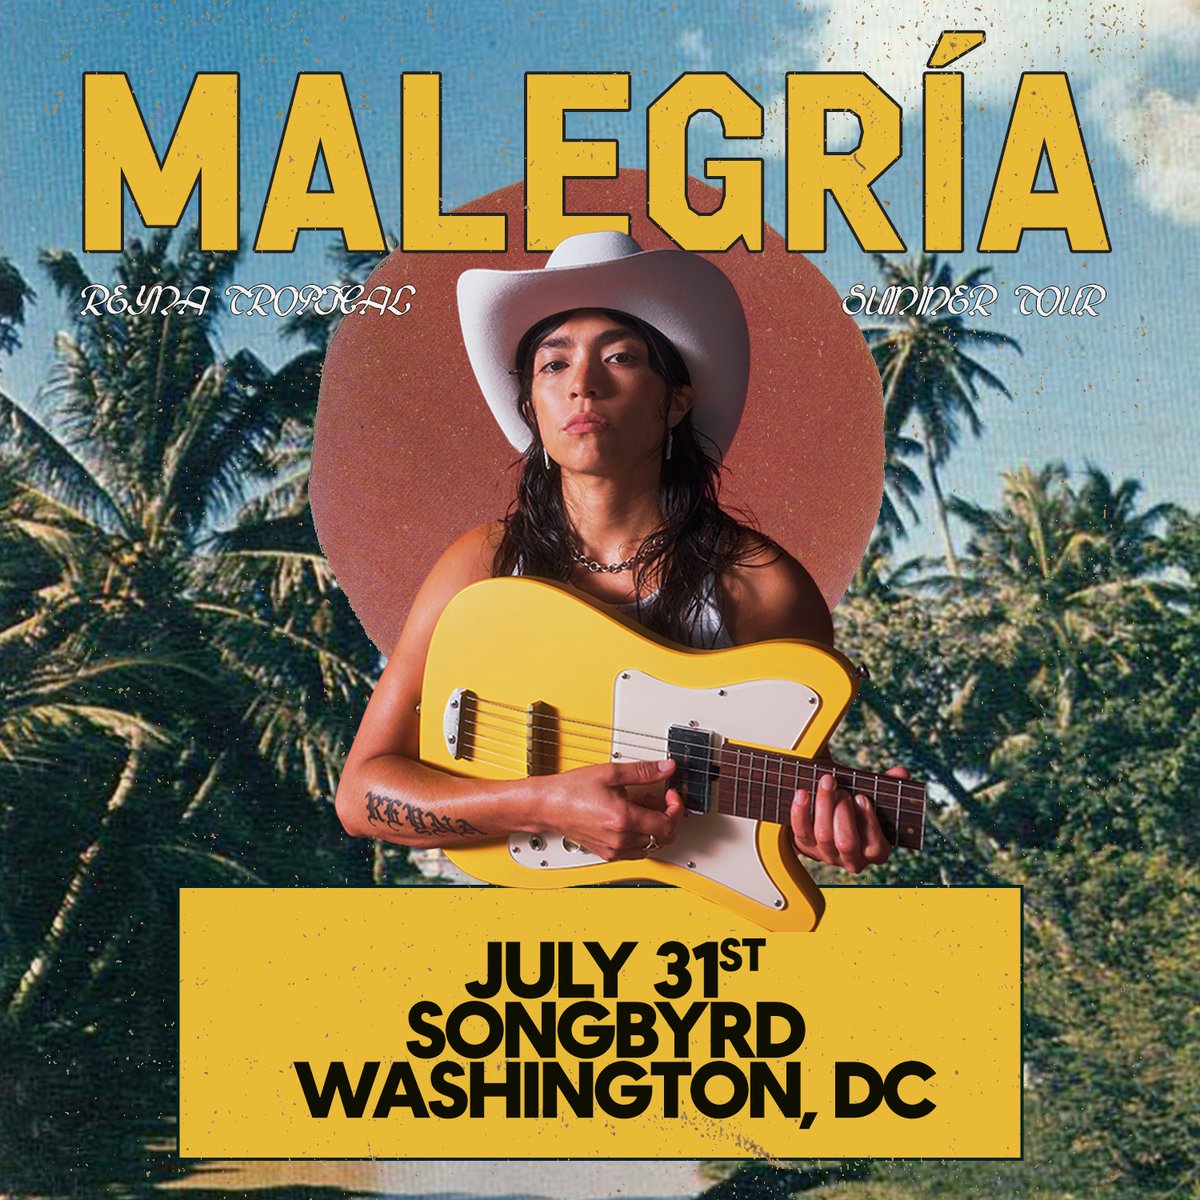 JUST ANNOUNCED & NOW ON SALE! Alternative latino artist Reyna Tropical (@hifabi91) brings the Malegría Tour to The Byrd 7/31! TIX >> link.dice.fm/a5ec5991595a